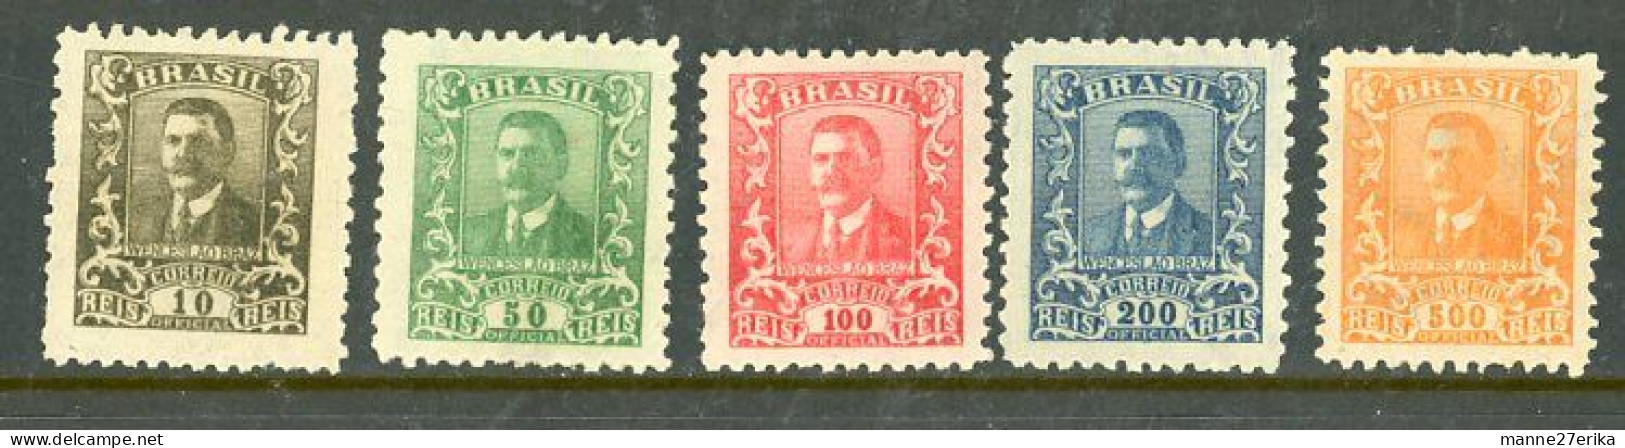 Brazil 1919 MH - Unused Stamps